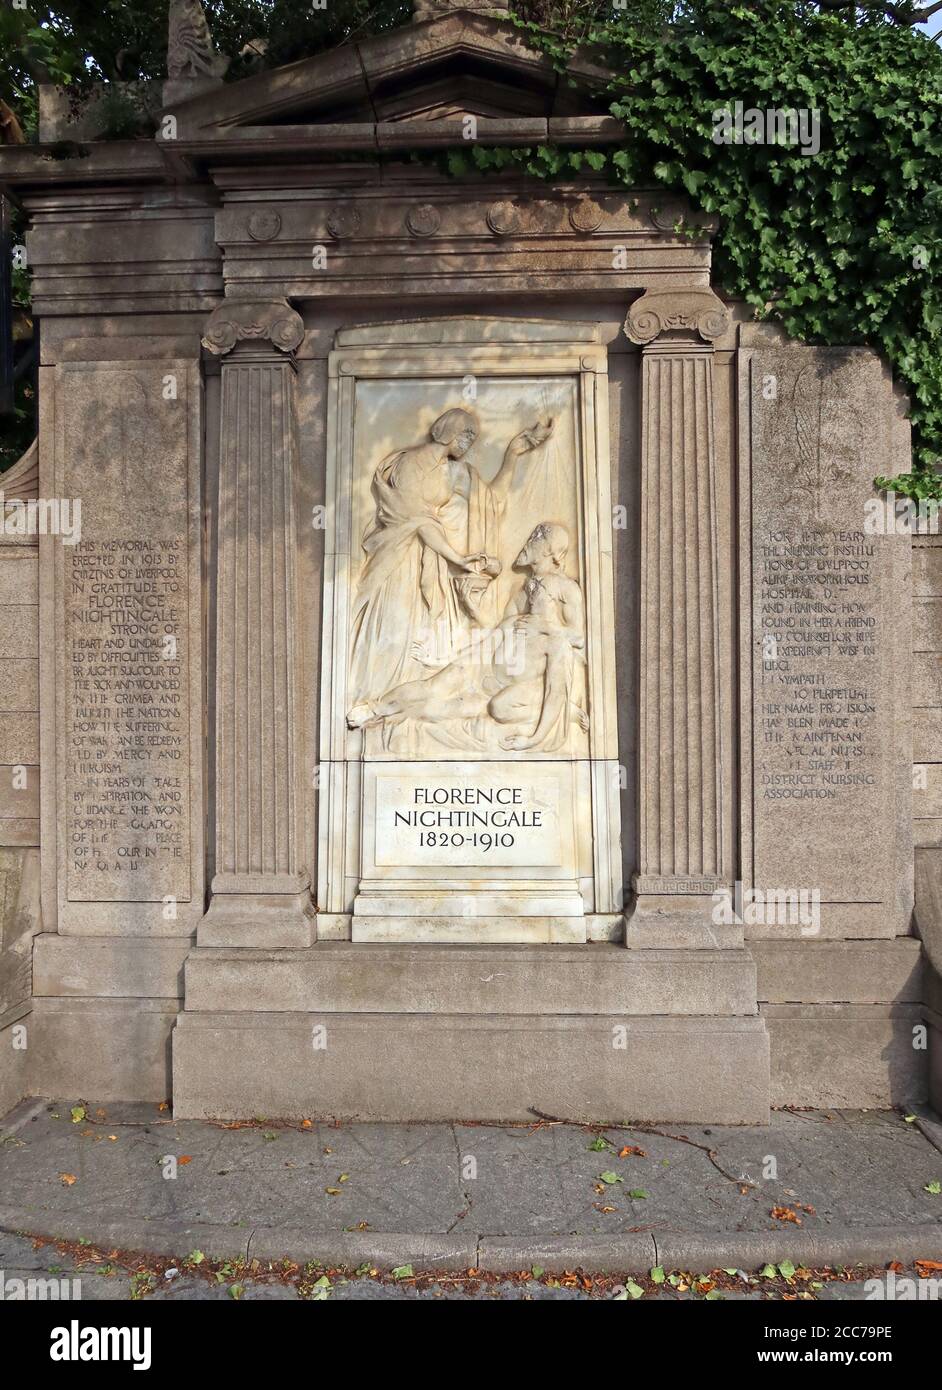 Florence Nightingale Memorial Liverpool, Upper Parliament Street,Merseyside, England, UK Stock Photo